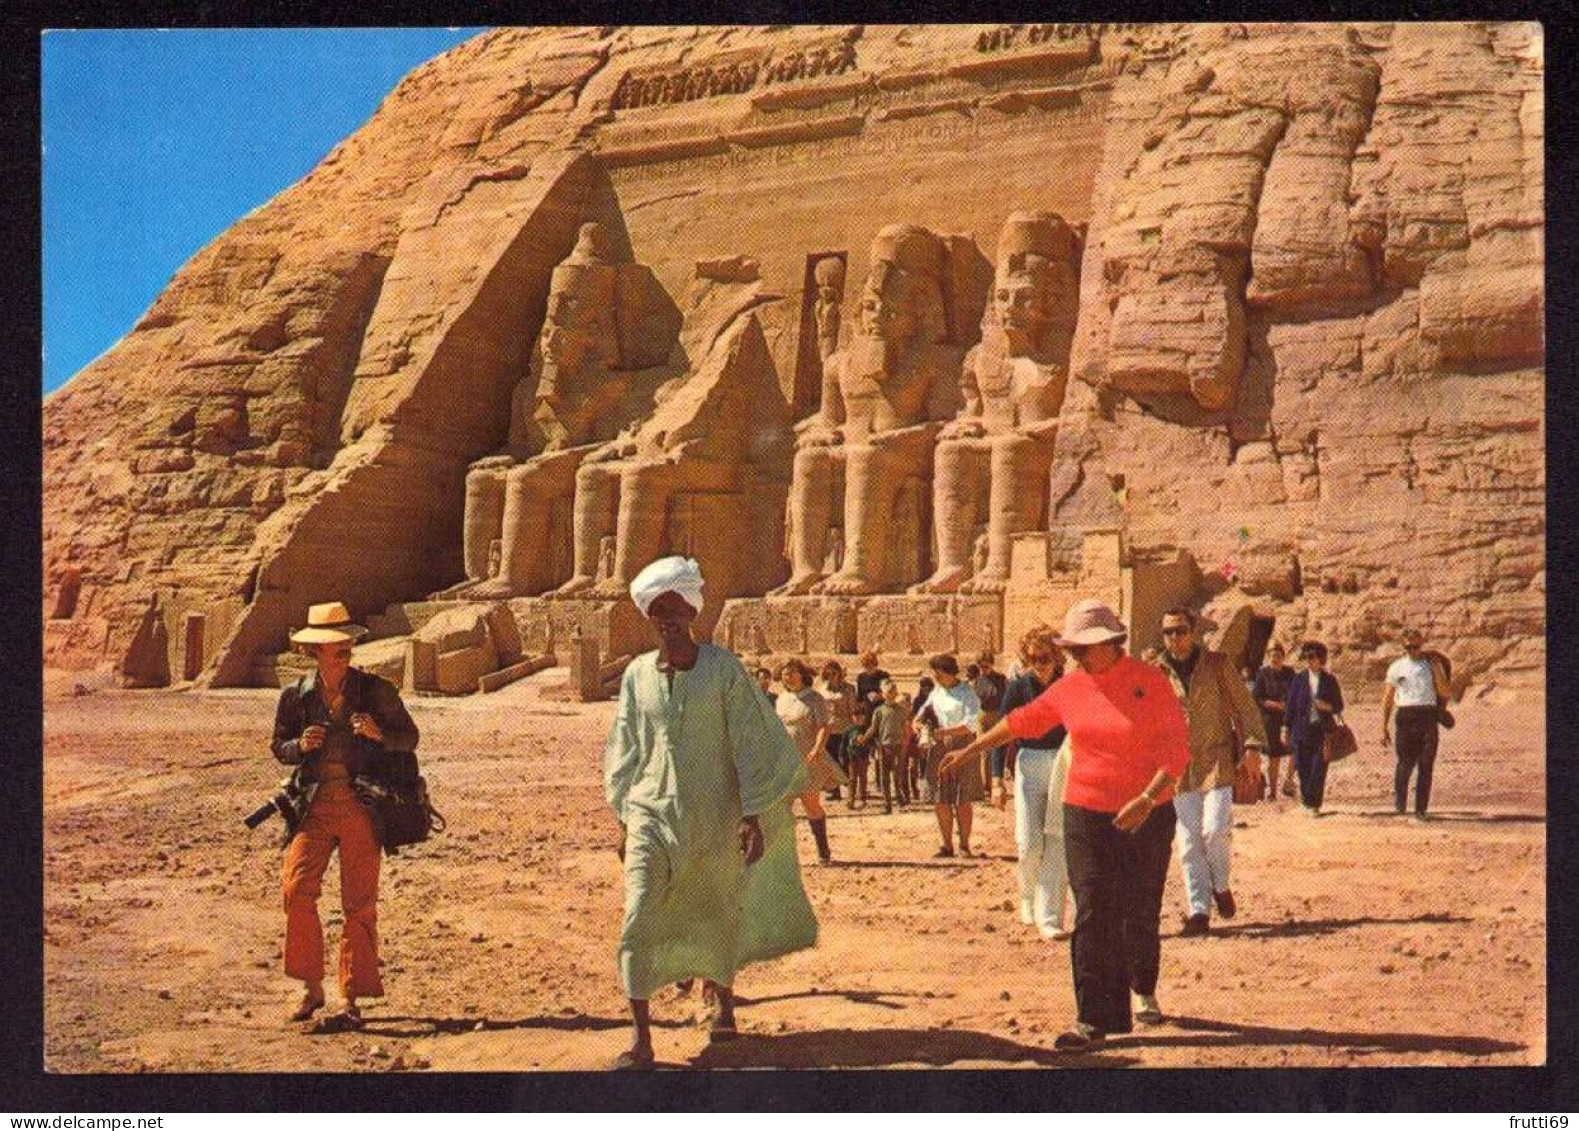 AK 200962 EGYPT - Abou Simbel Rock Temple Of Ramses II - Portail View Of The Gigantic Statues - Abu Simbel